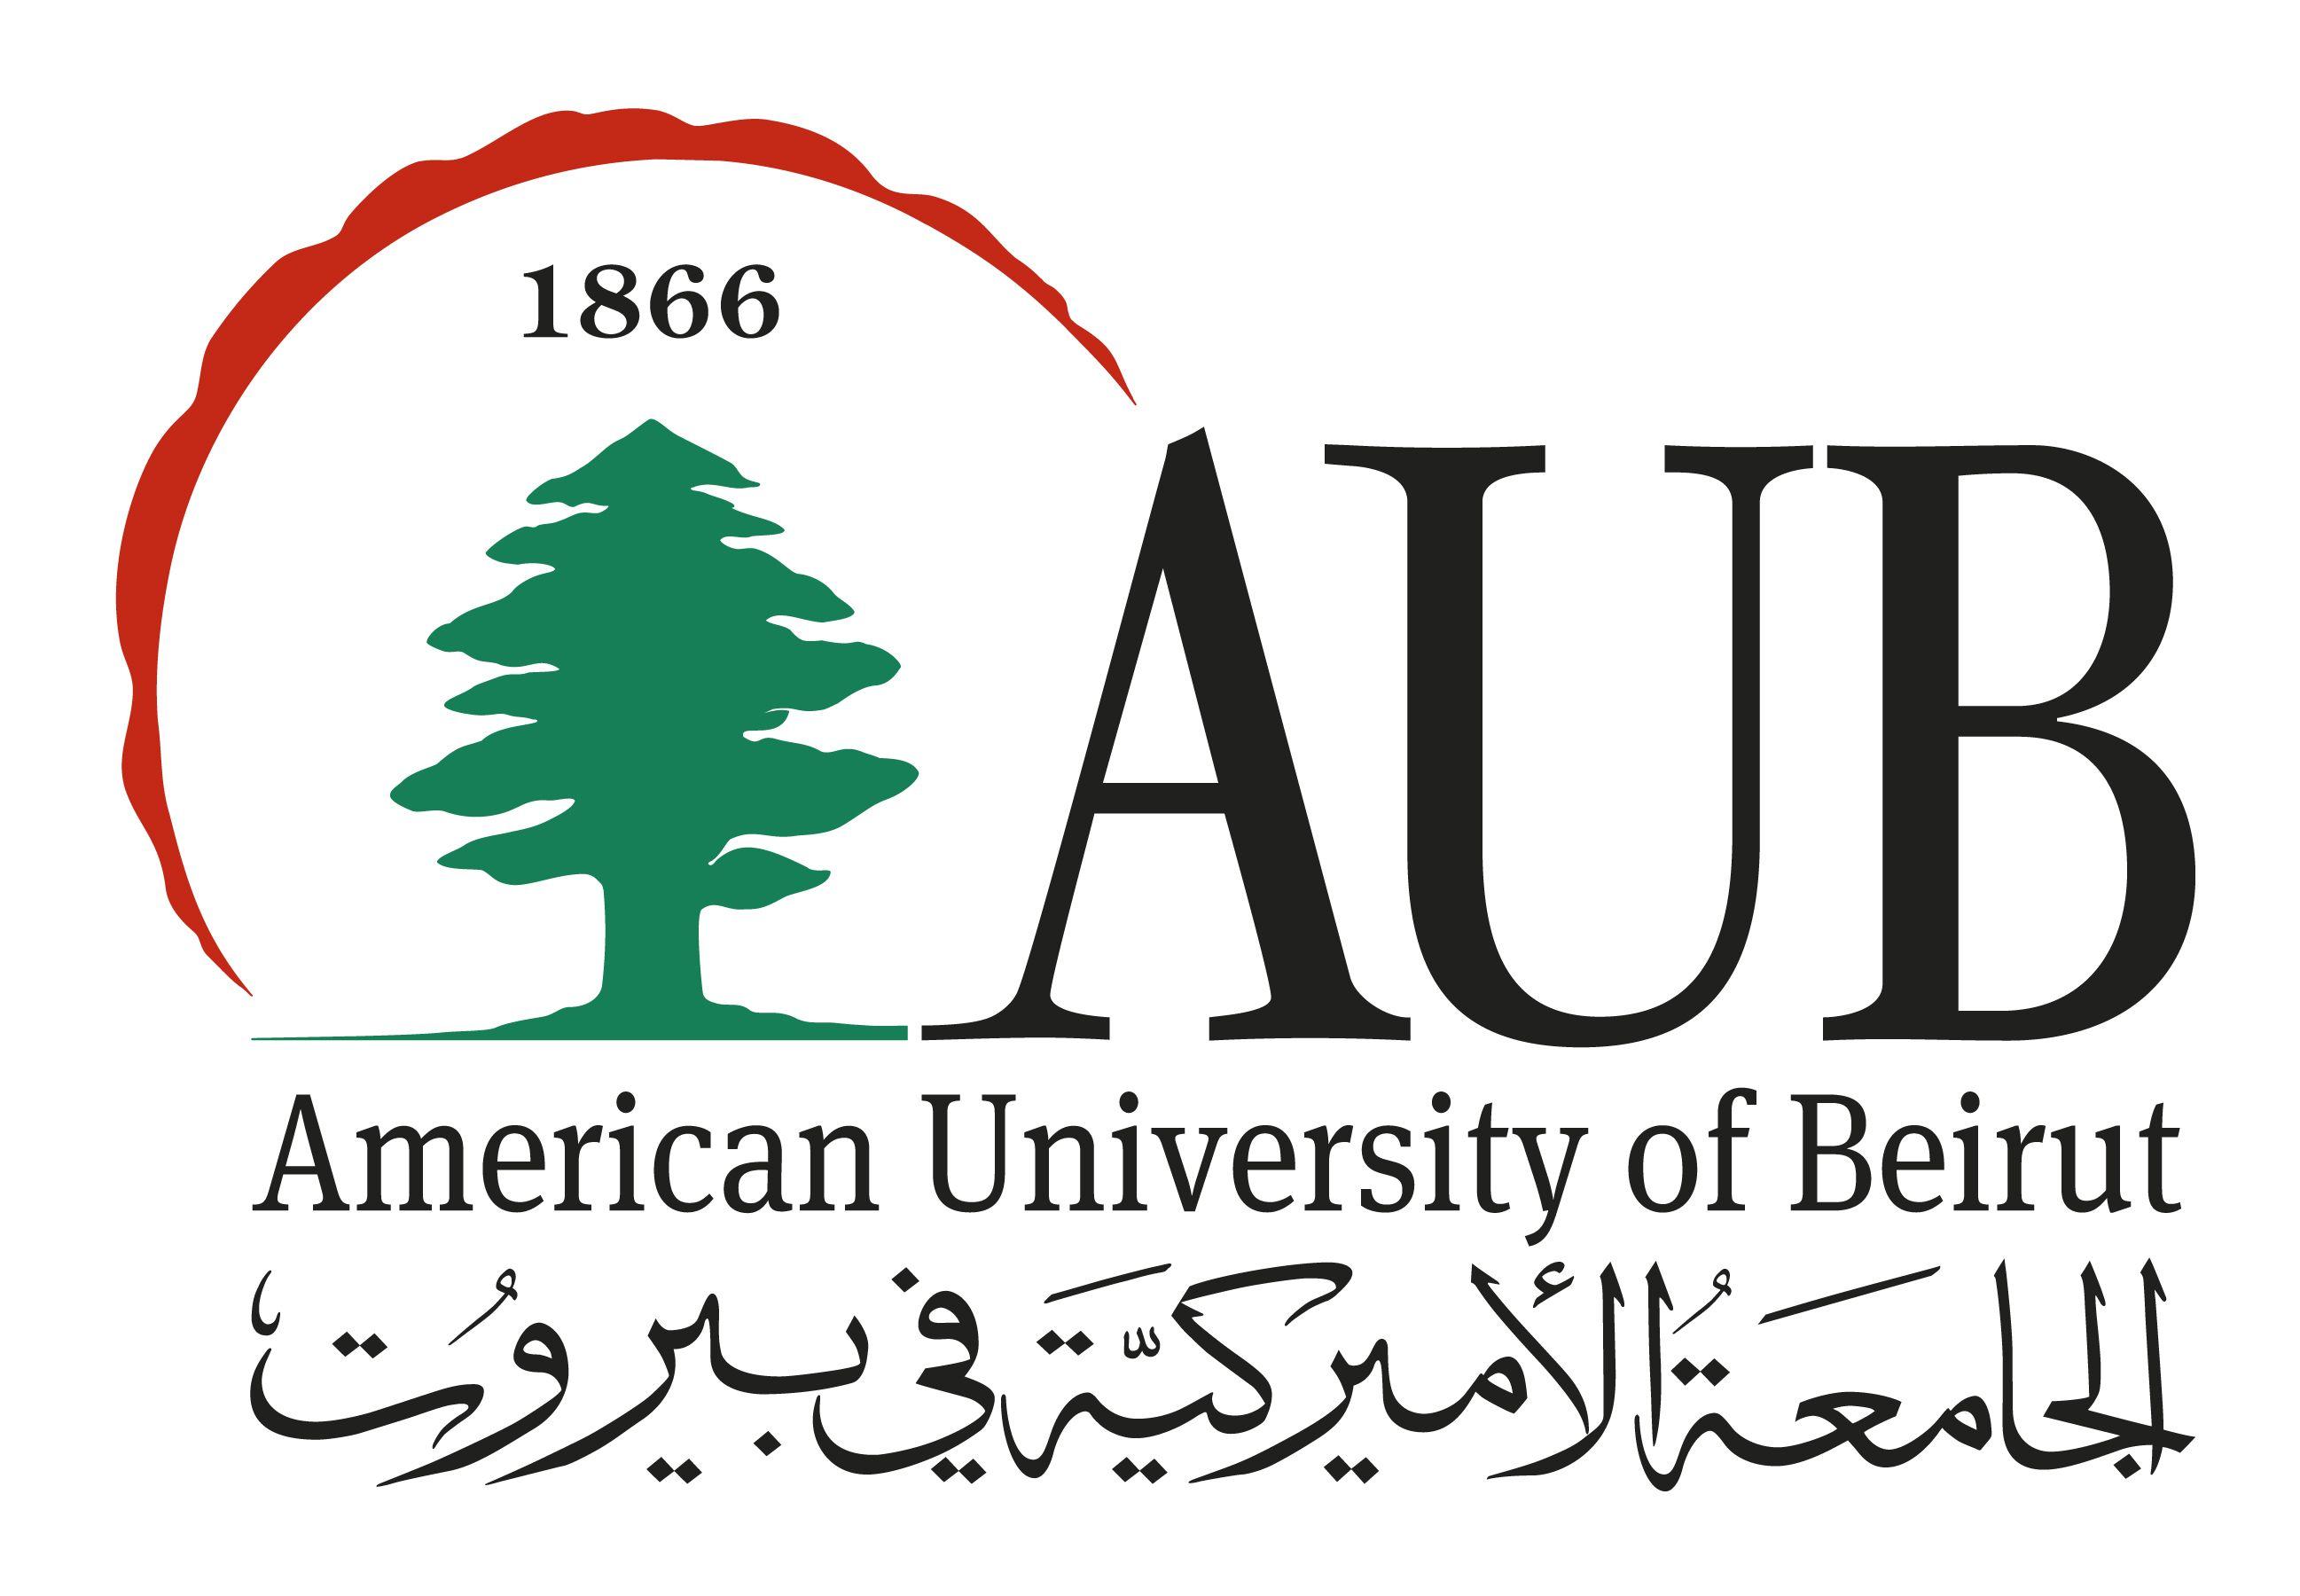 American U Logo - Inside Higher Ed. American University of Beirut